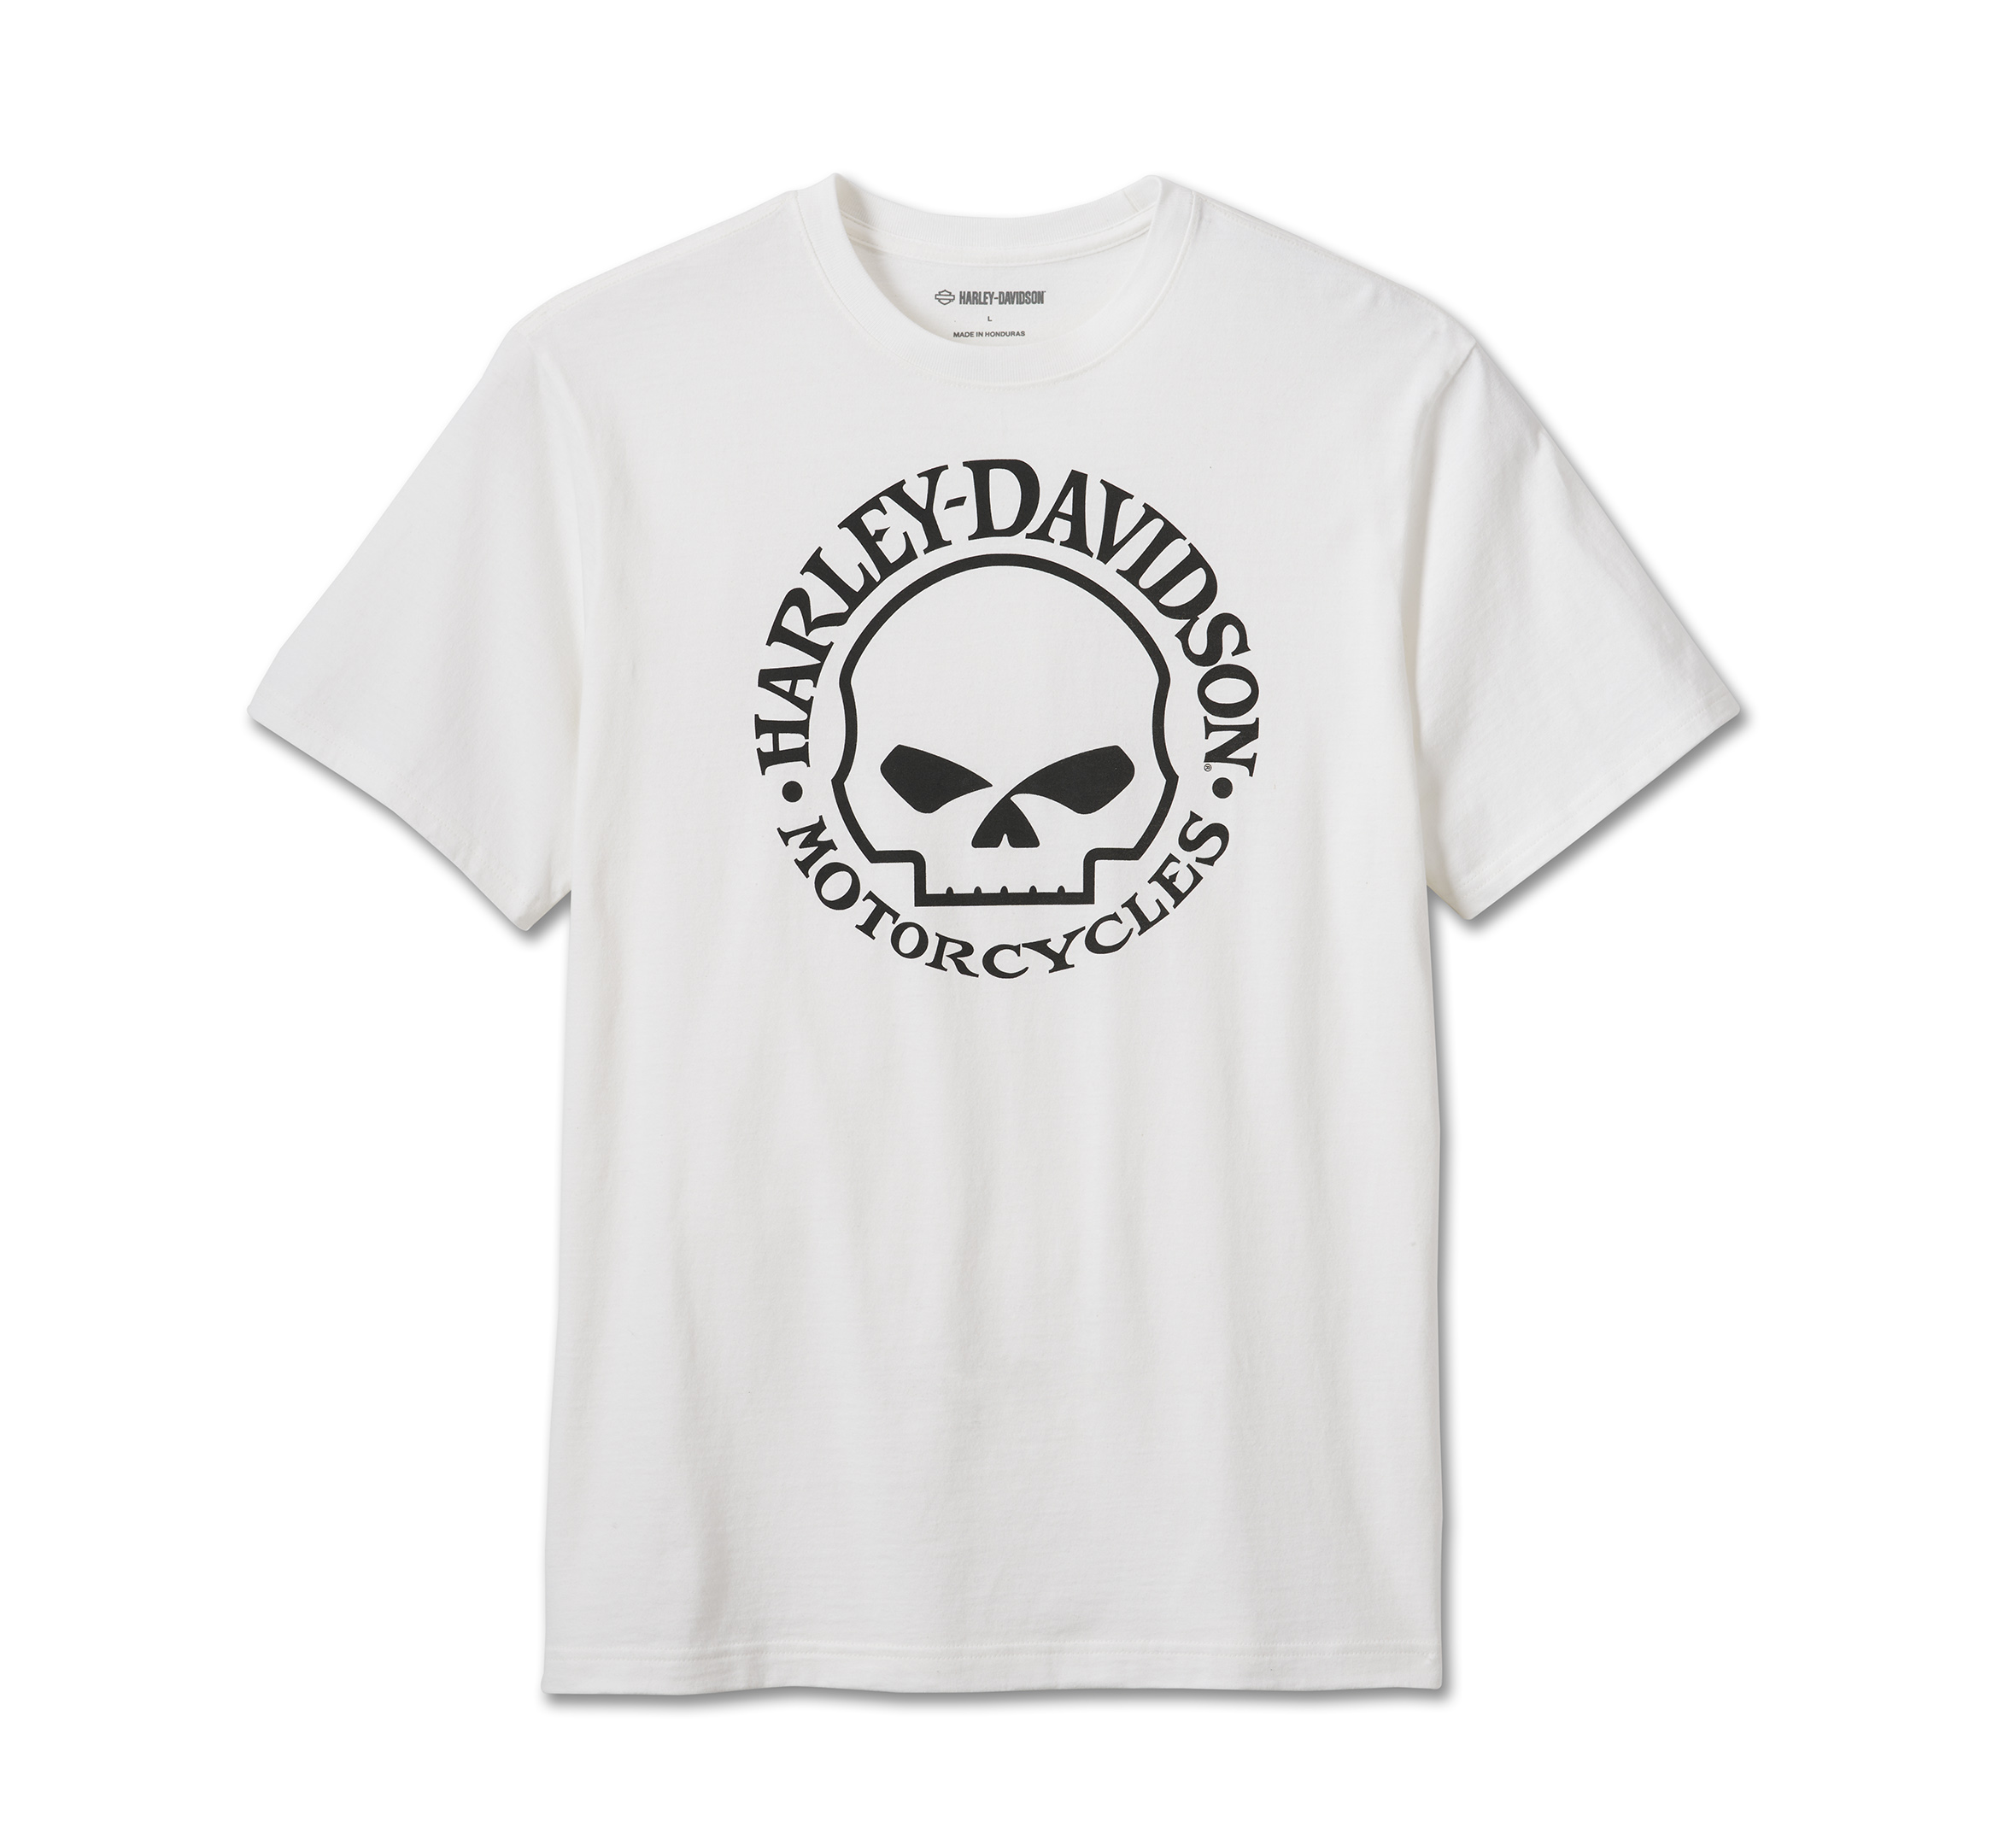 Harley Davidson Skull tee-shirt compression sport cosplay Homme